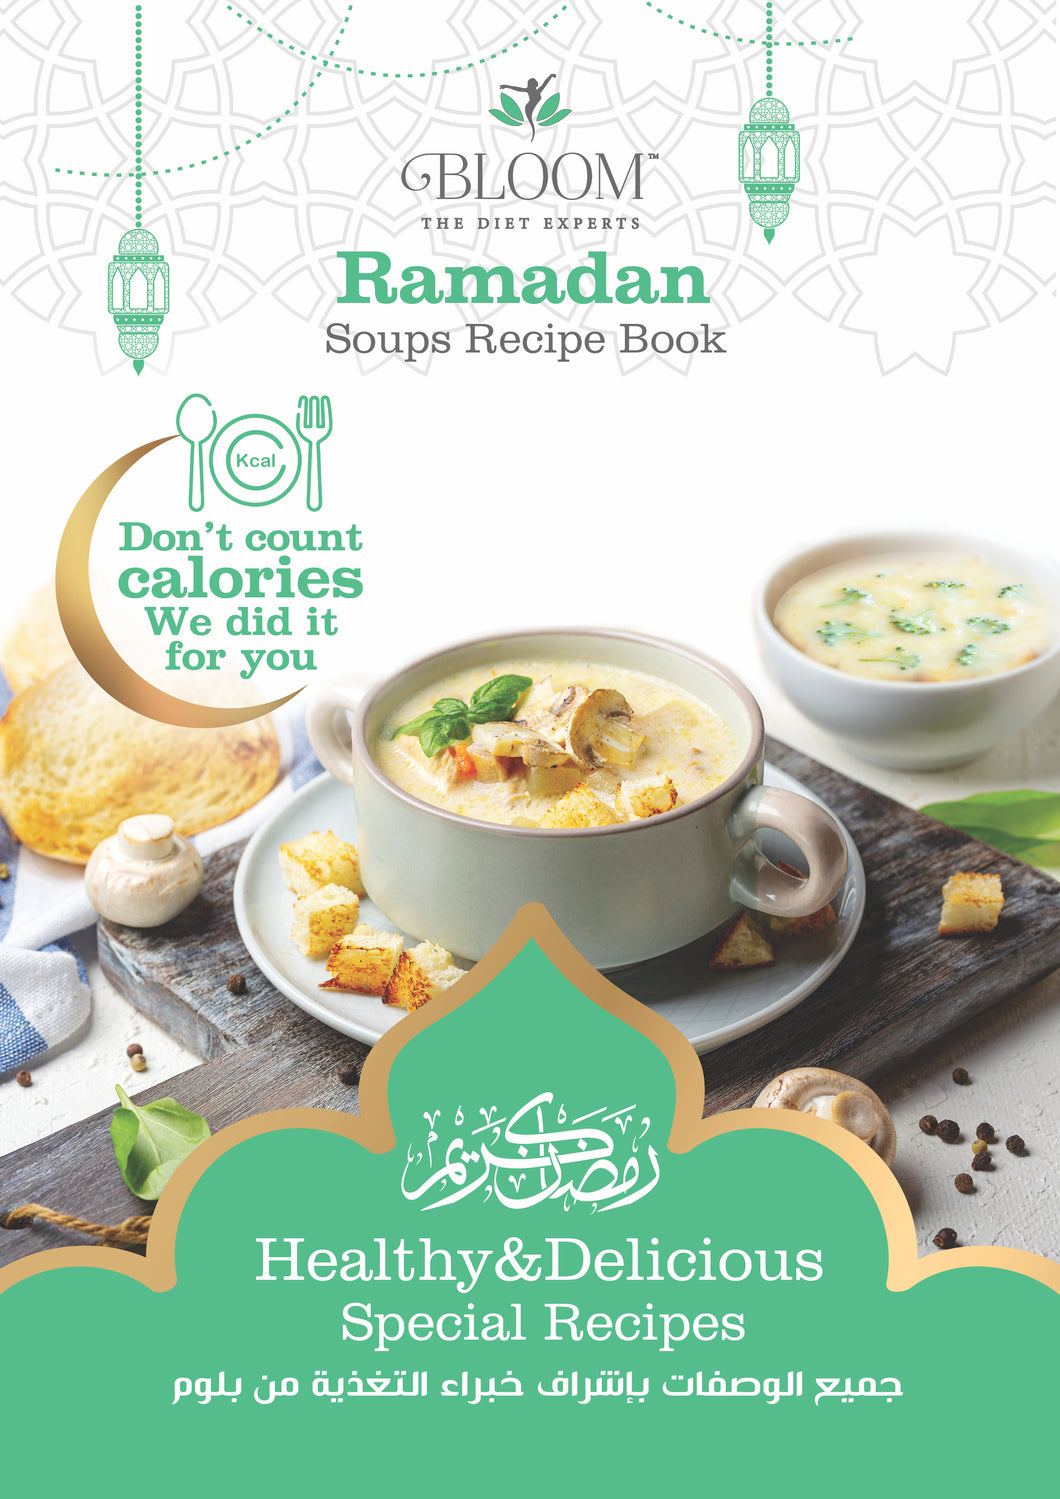 Ramadan Soup Book